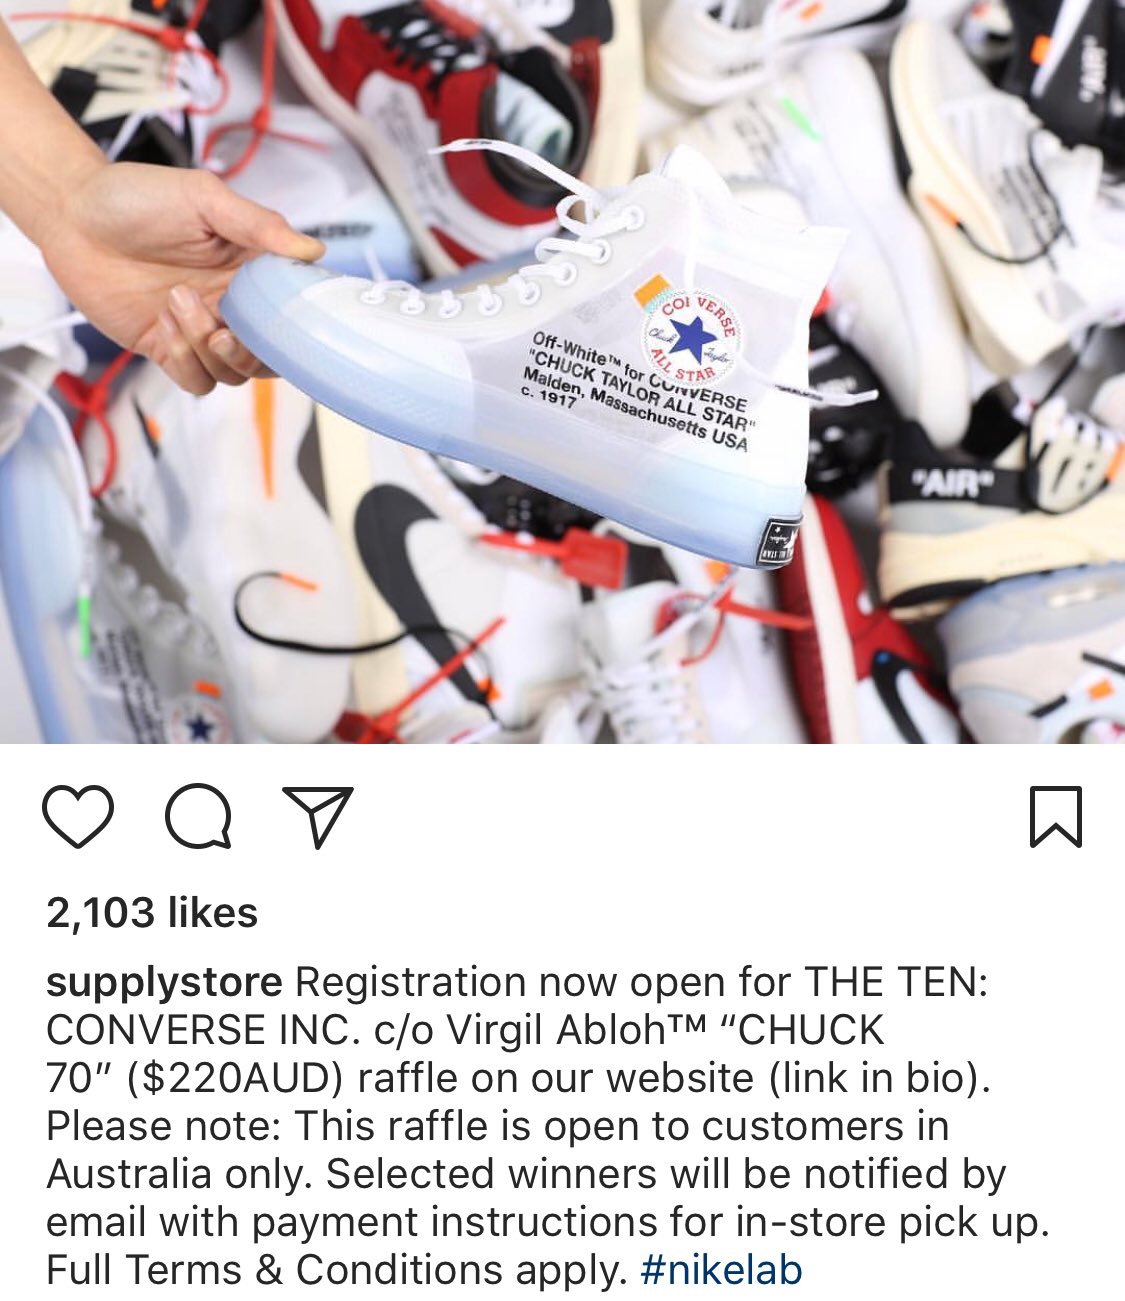 SNKR_TWITR on X: "For the Australian fams...the Off-White x Converse online  raffle for in-store pick up is open on Supplystore *Australia only*  https://t.co/StpTc2l6rV #snkr_twitr https://t.co/EpXzU10Ujk" / X